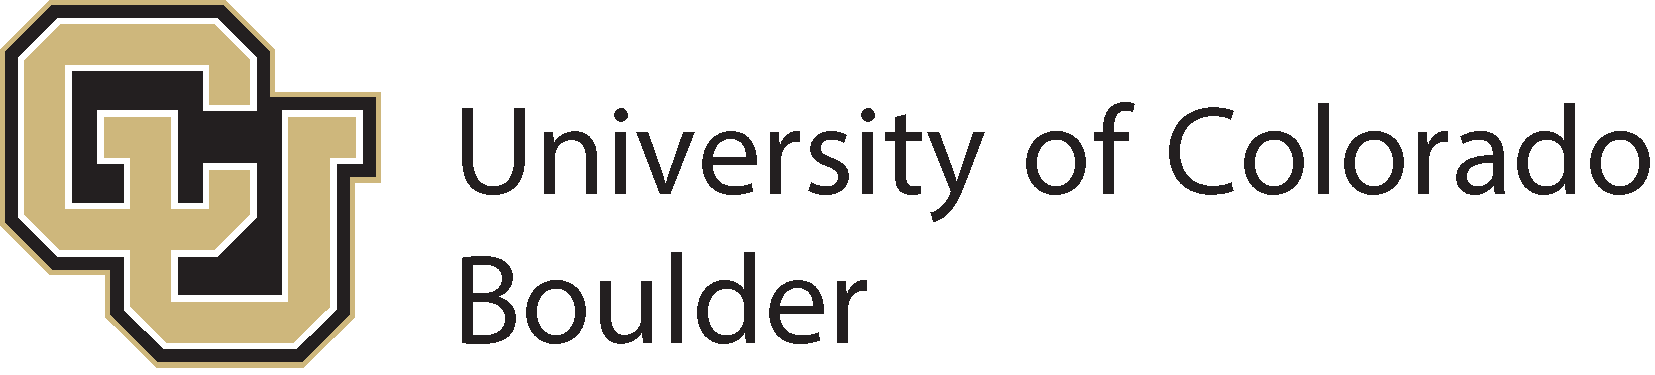 University of Colorado Boulder Logo (CU Boulder) - SVG, PNG, AI, EPS ...